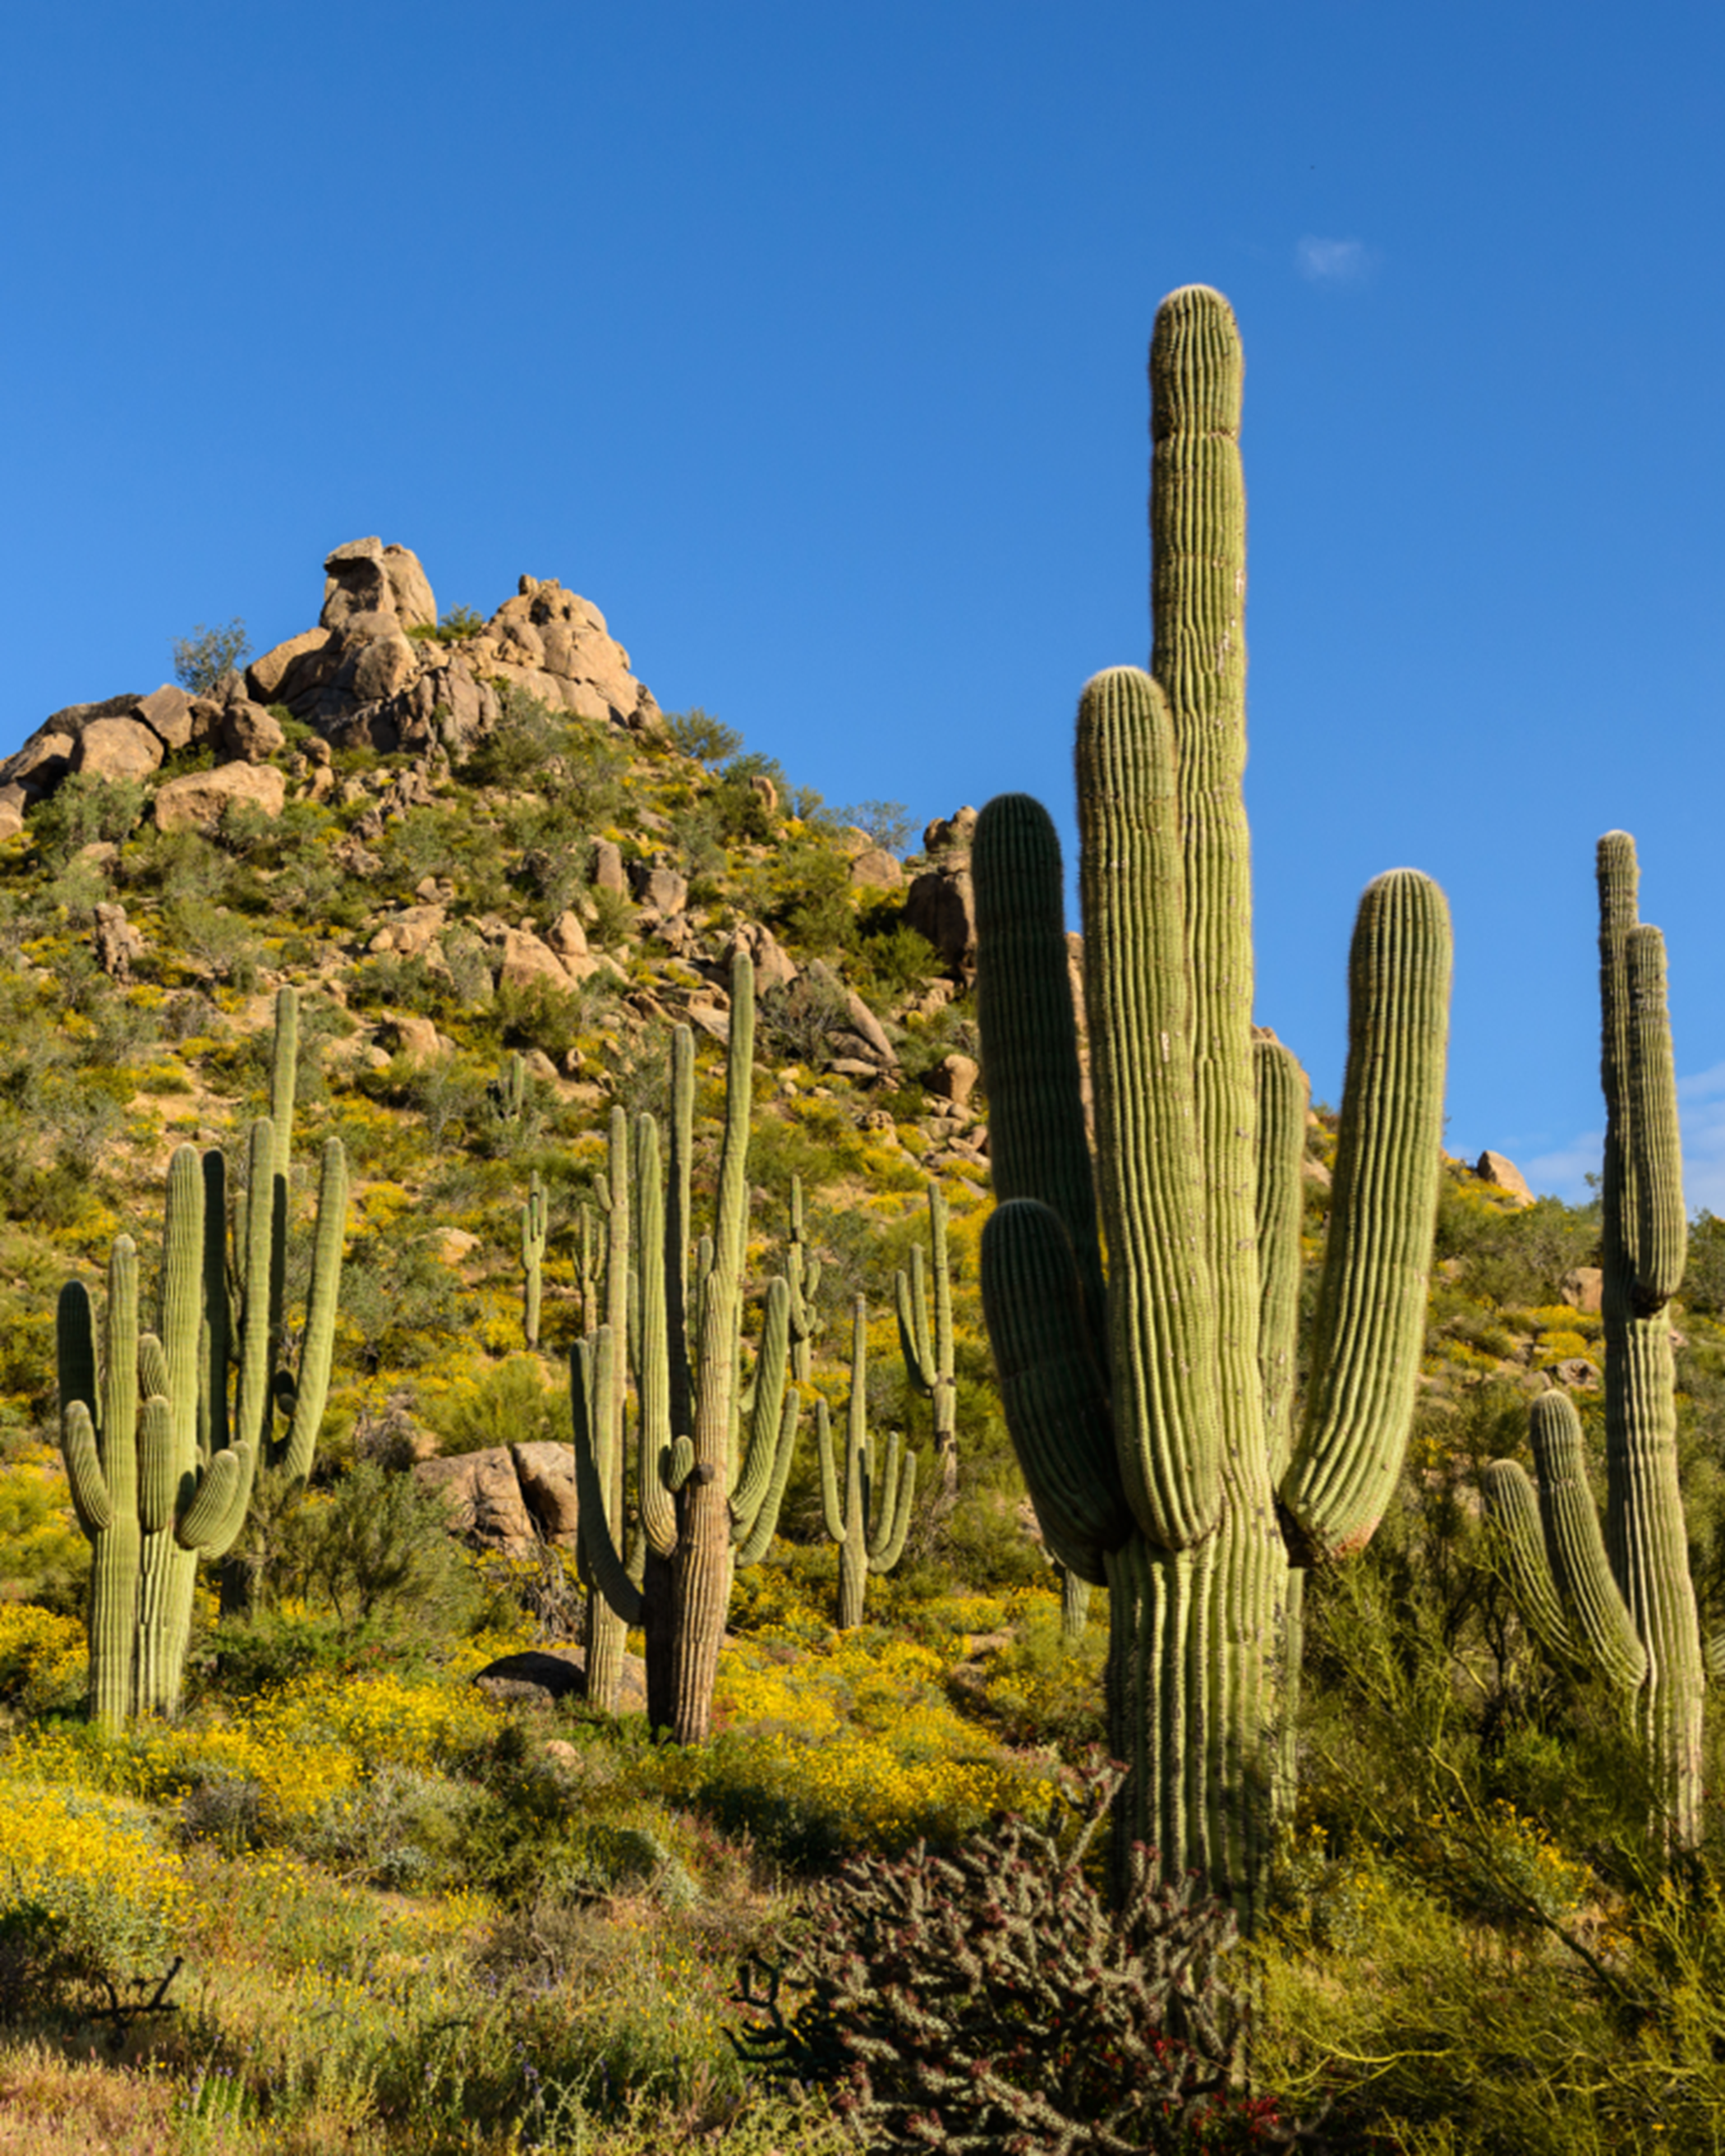 Cacti in the Sonoran desert